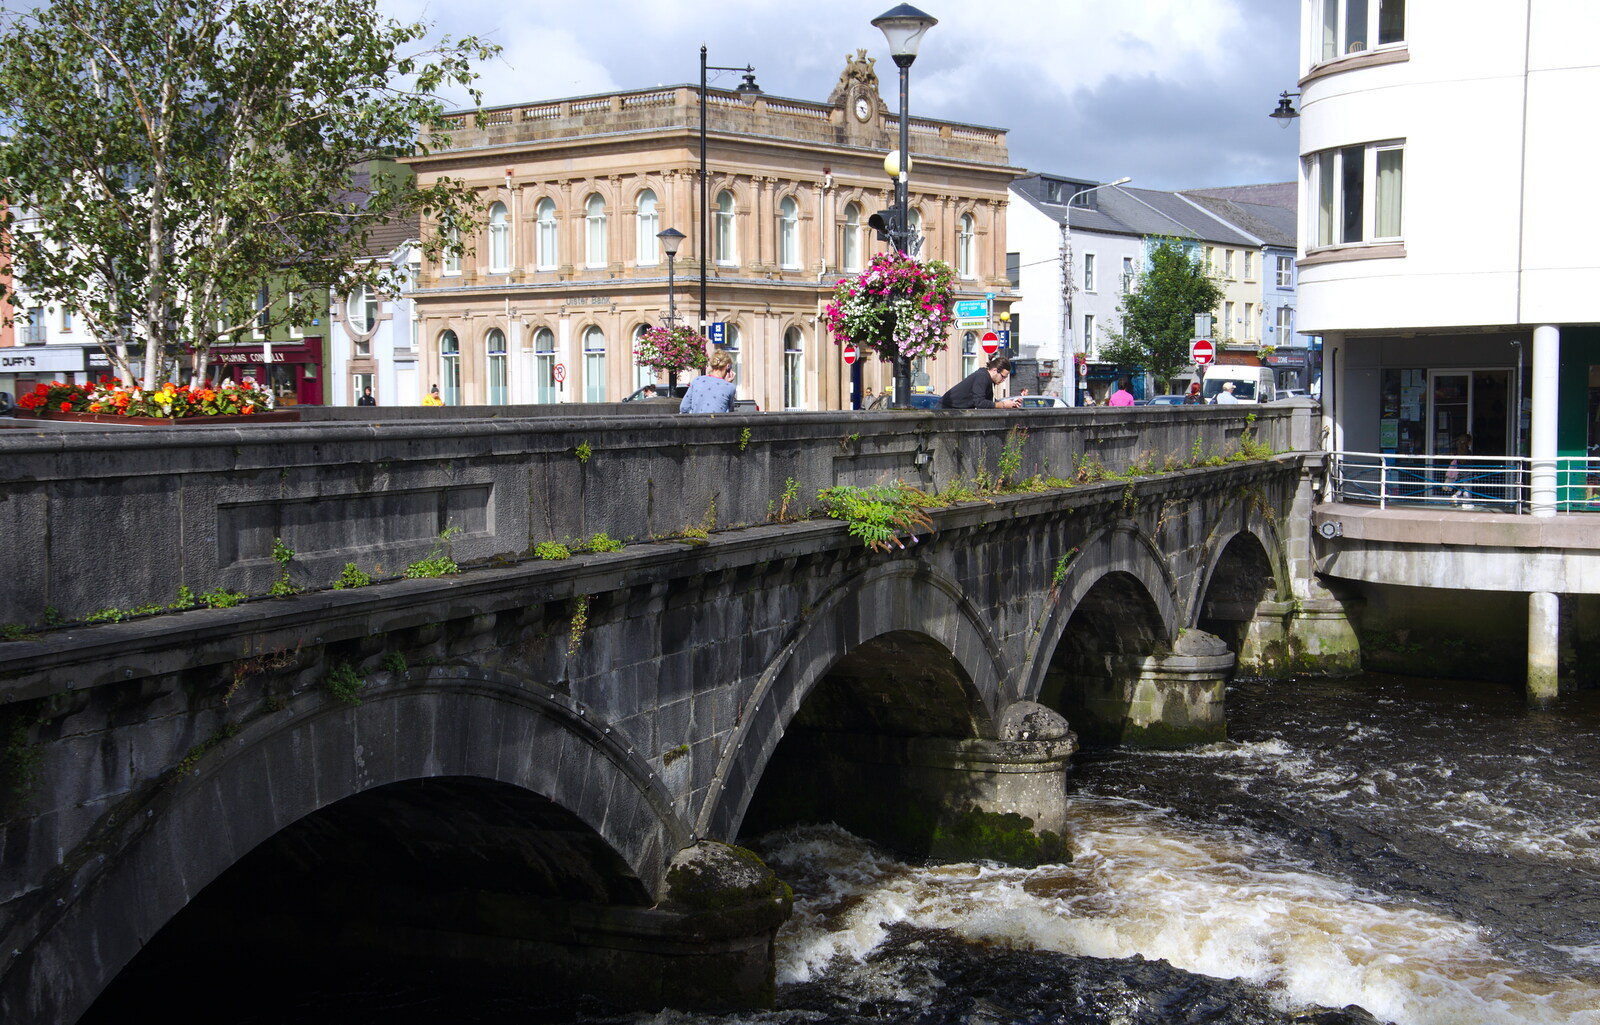 The Knox Street Bridge from Florence Court and a Postcard from Sligo, Fermanagh and Sligo, Ireland - 21st August 2019